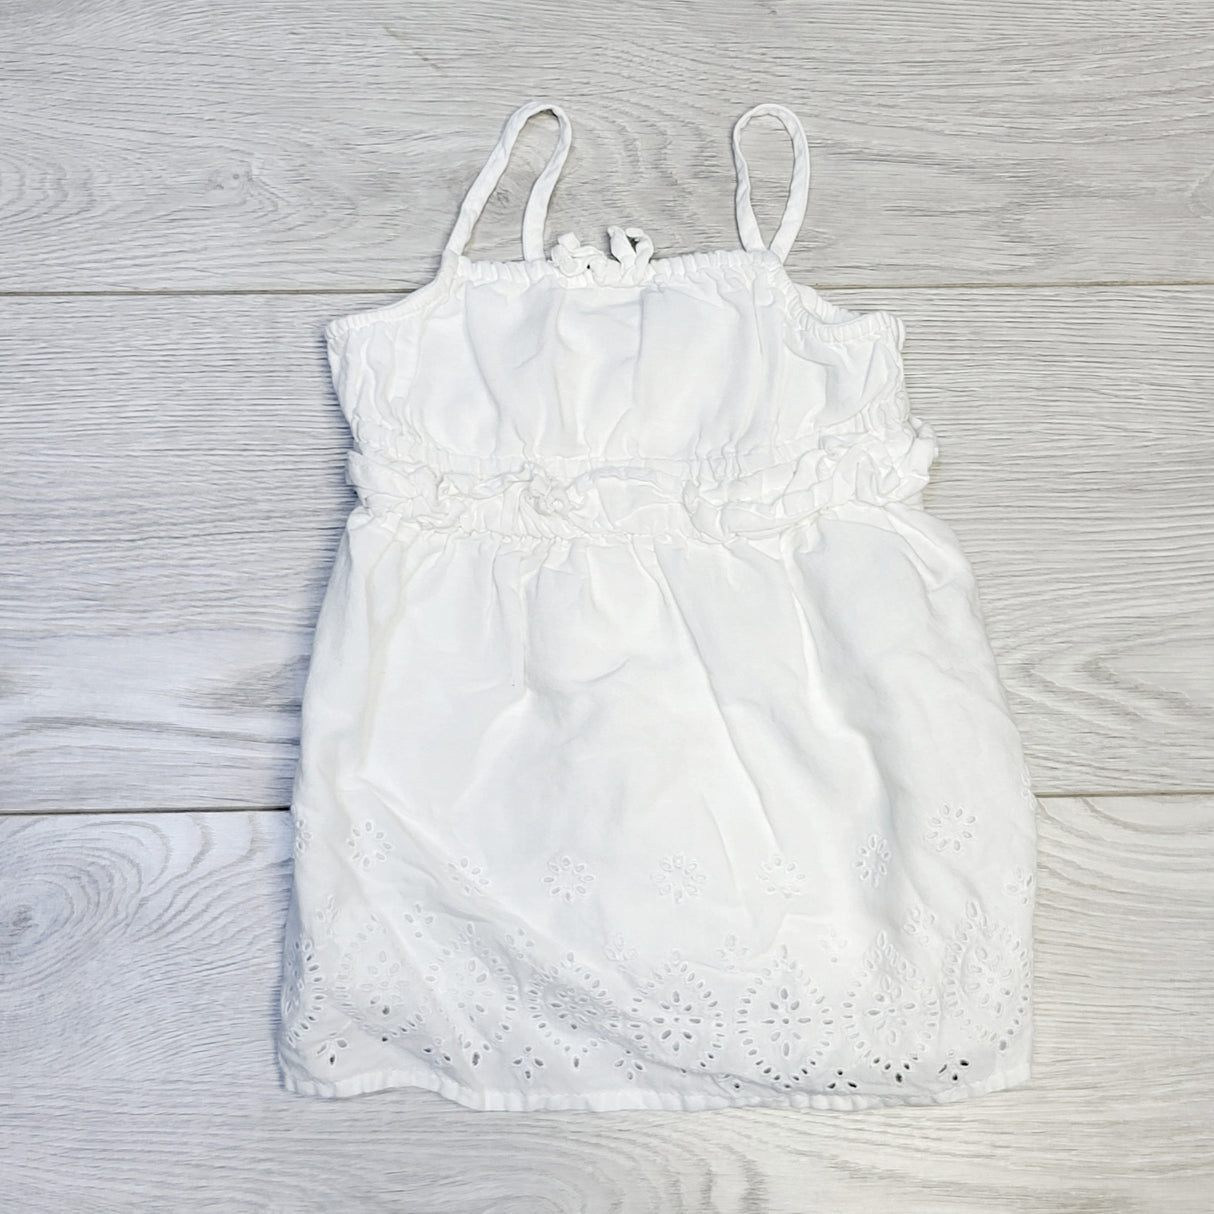 COWN1 - Old Navy white sleeveless eyelet dress. Size 6-12 months